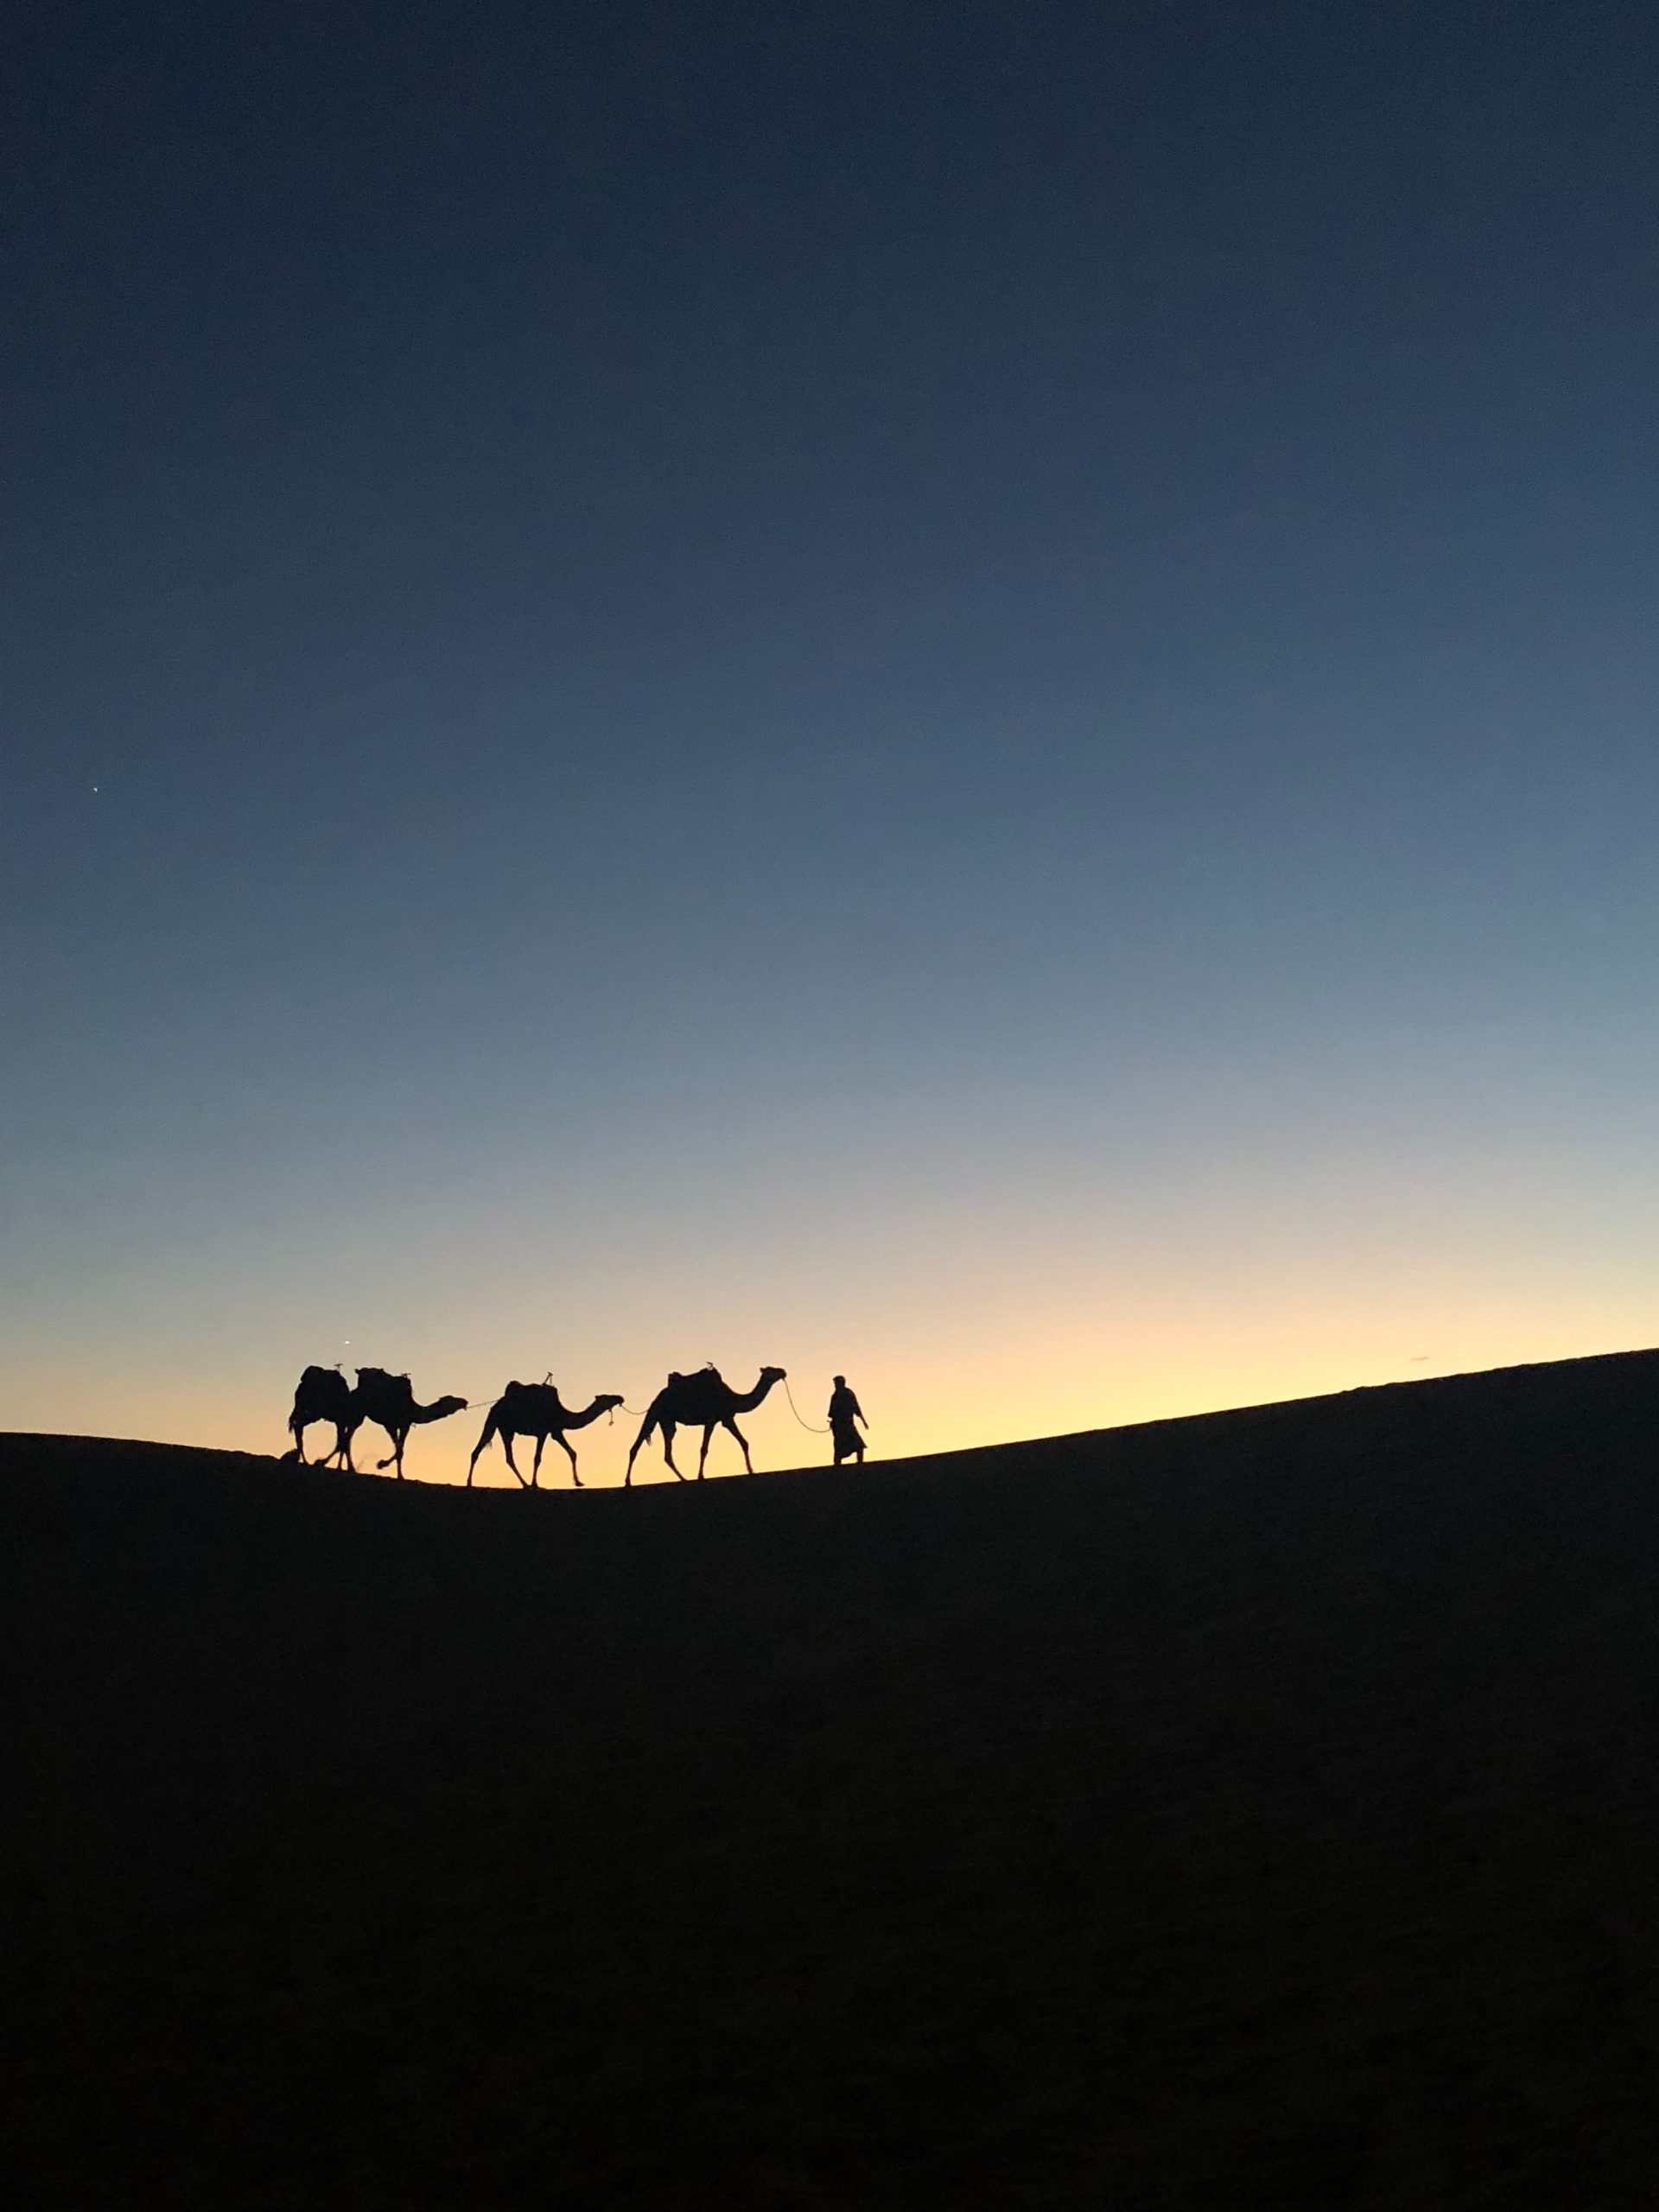 gallery image for New Year's Celebration in the Sahara Desert